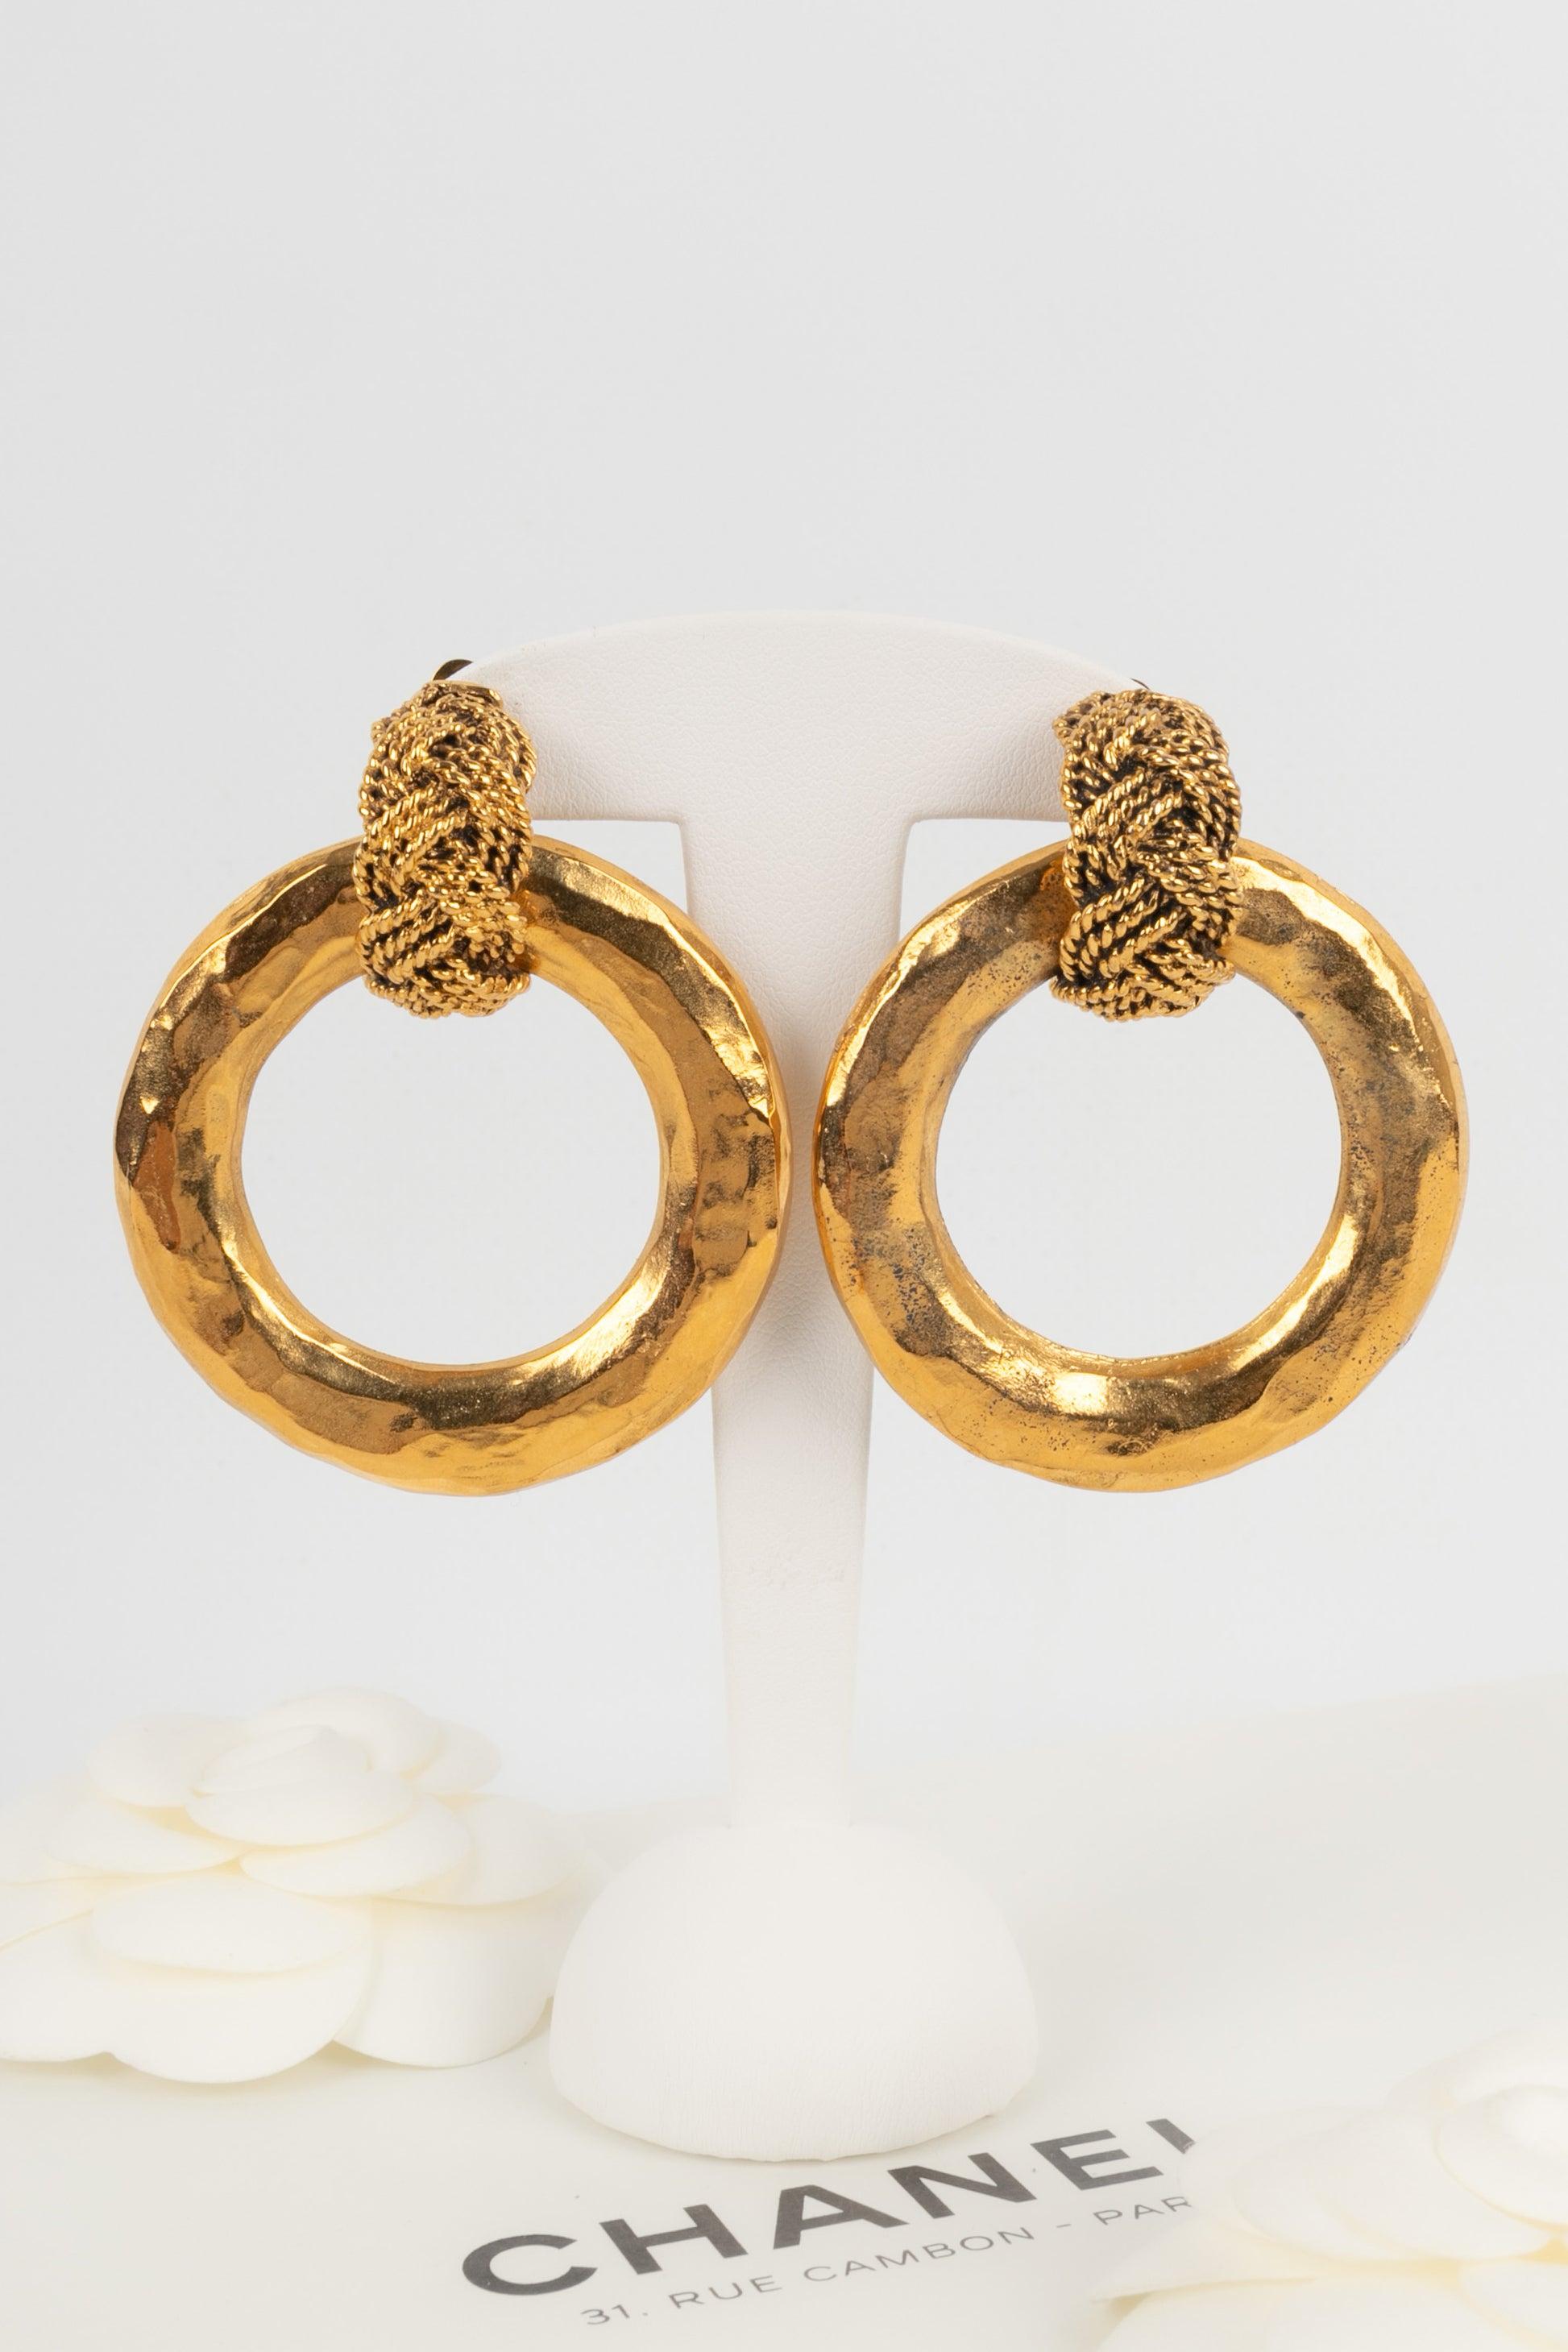 Chanel Golden Metal Clip-on Earrings, 1980s For Sale 3